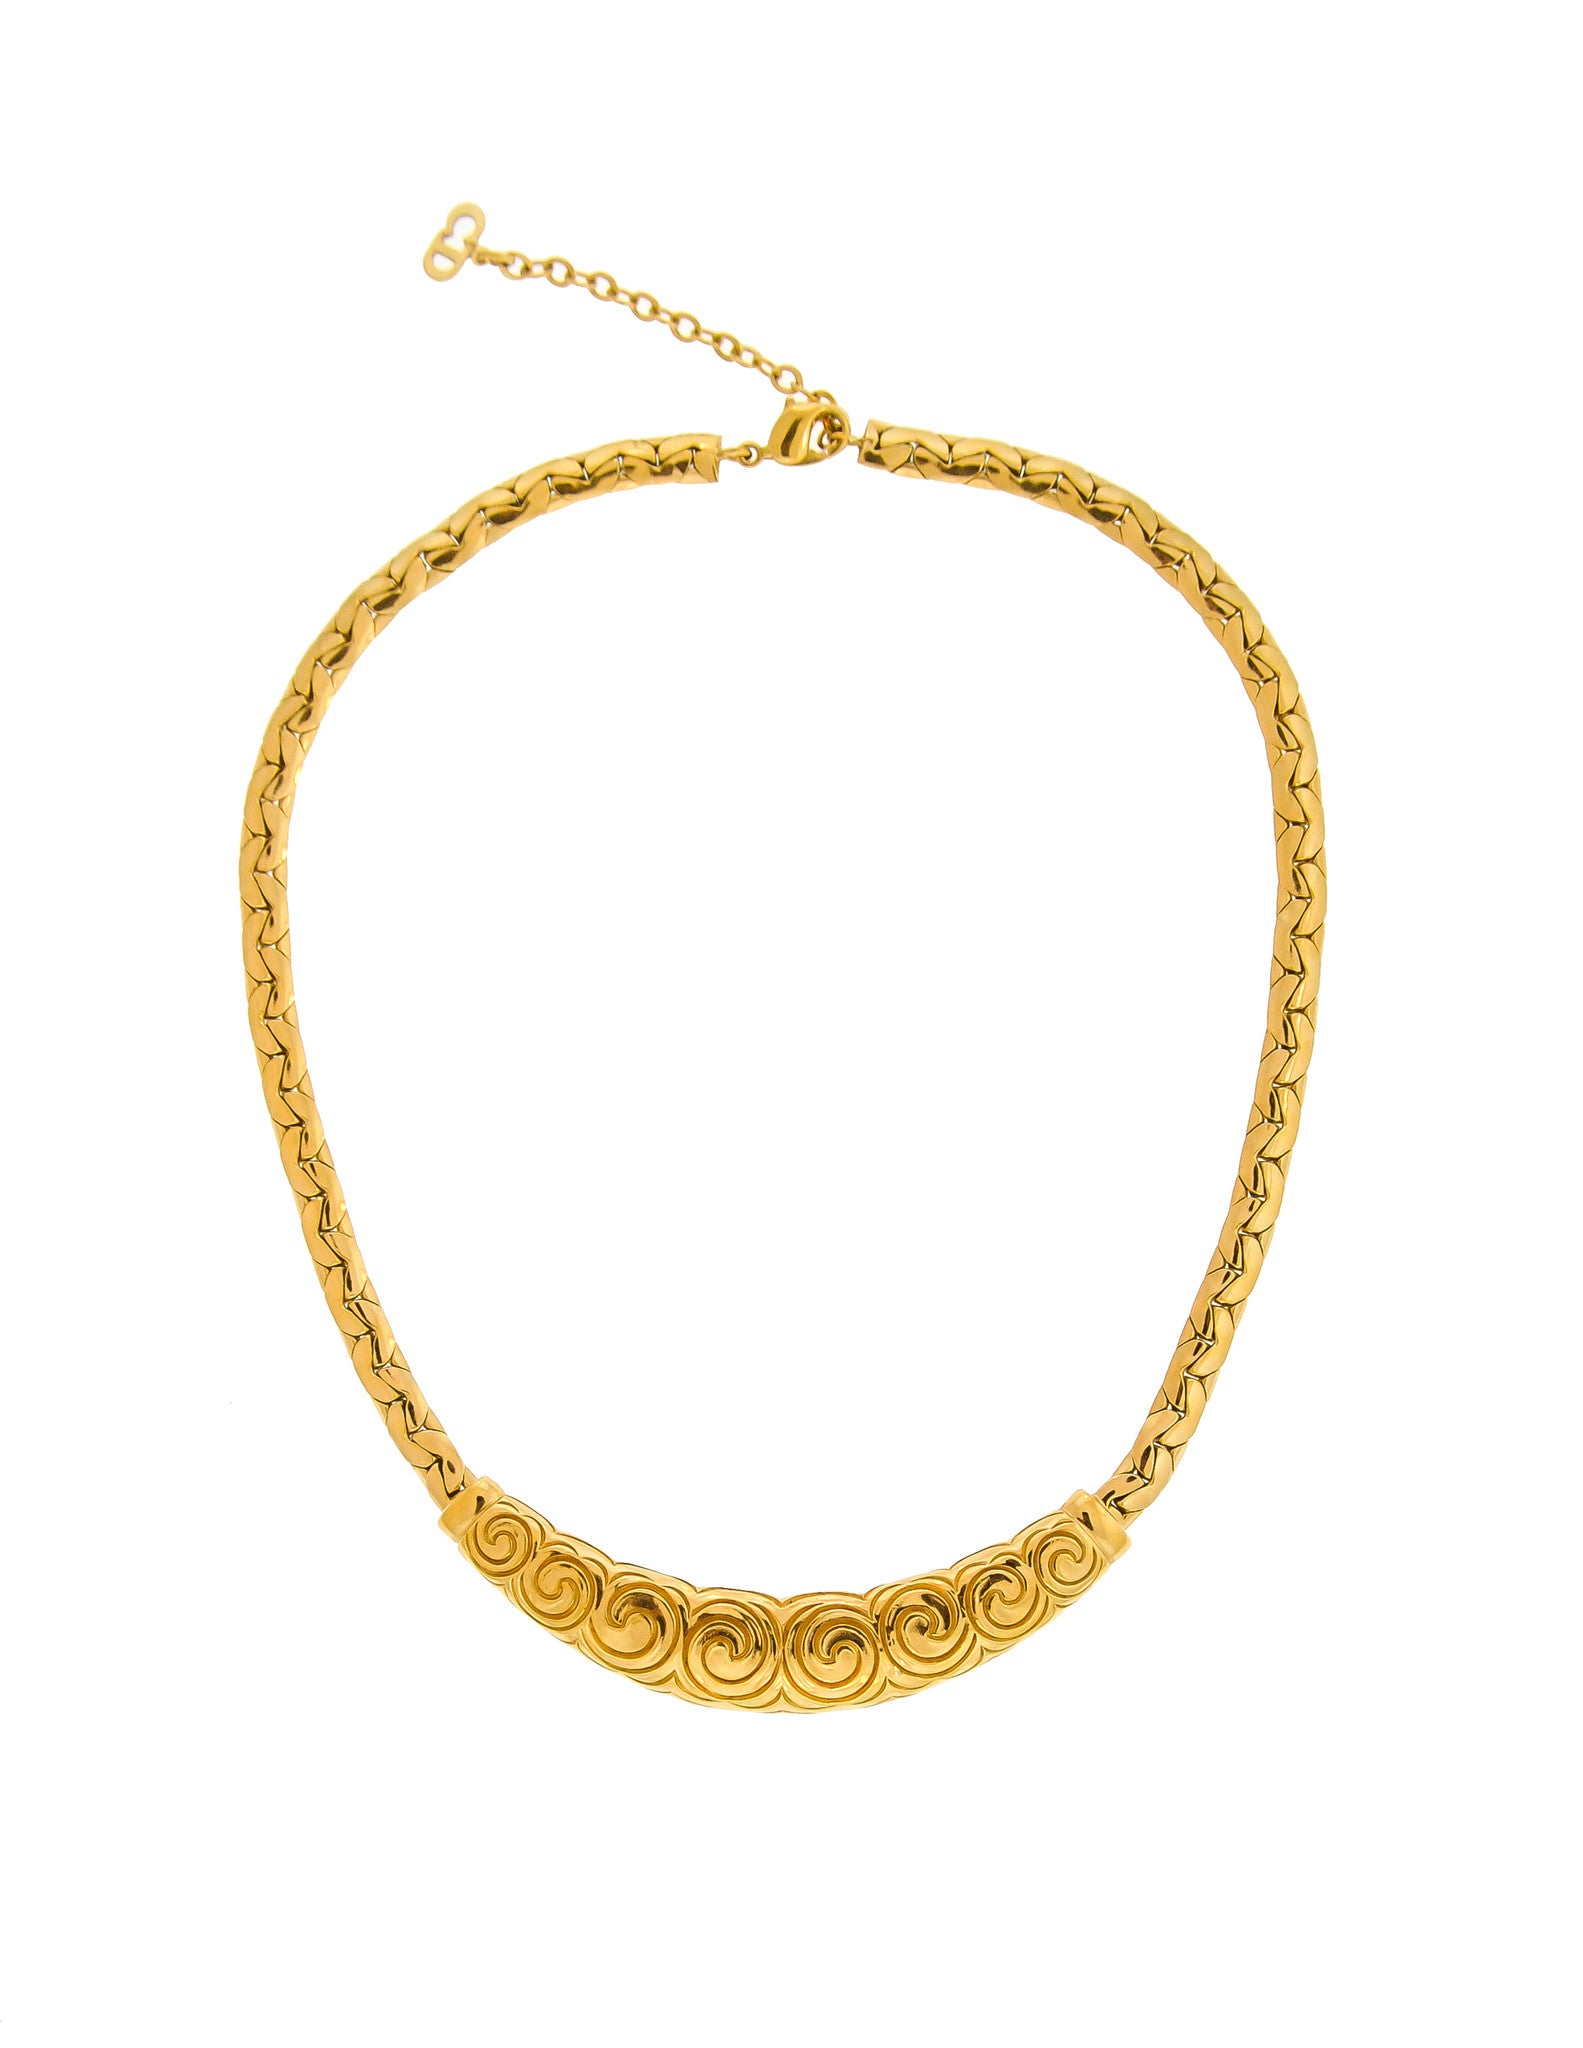 Christian Dior Vintage Gold Swirl Necklace